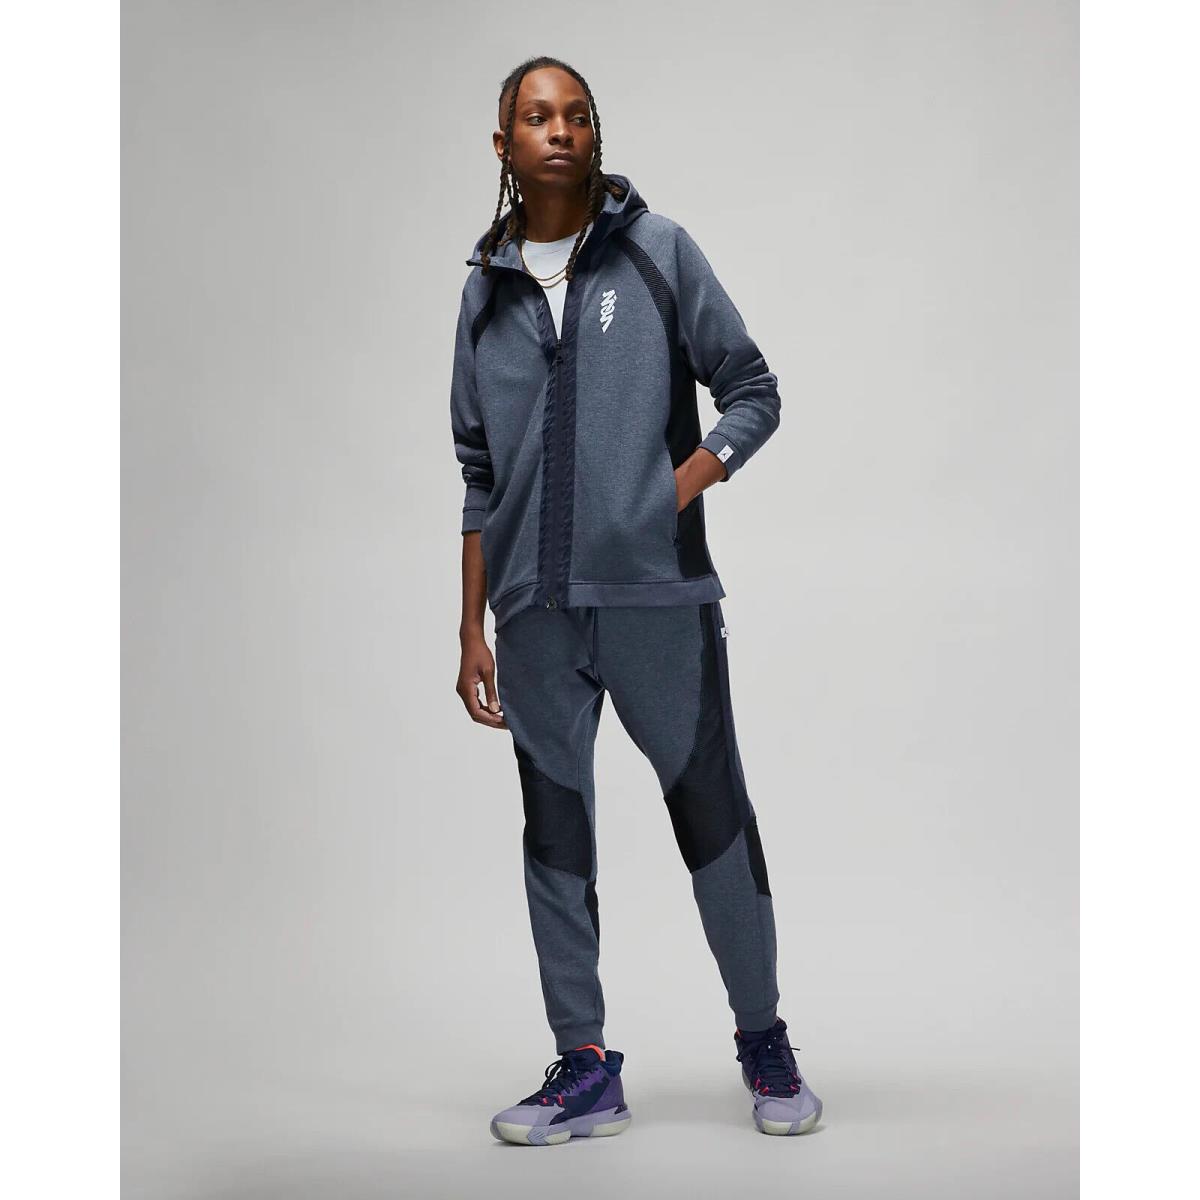 Nike Jordan Zion Men`s Hoodie Basketball Jacket Full Zip DR2115 410 M